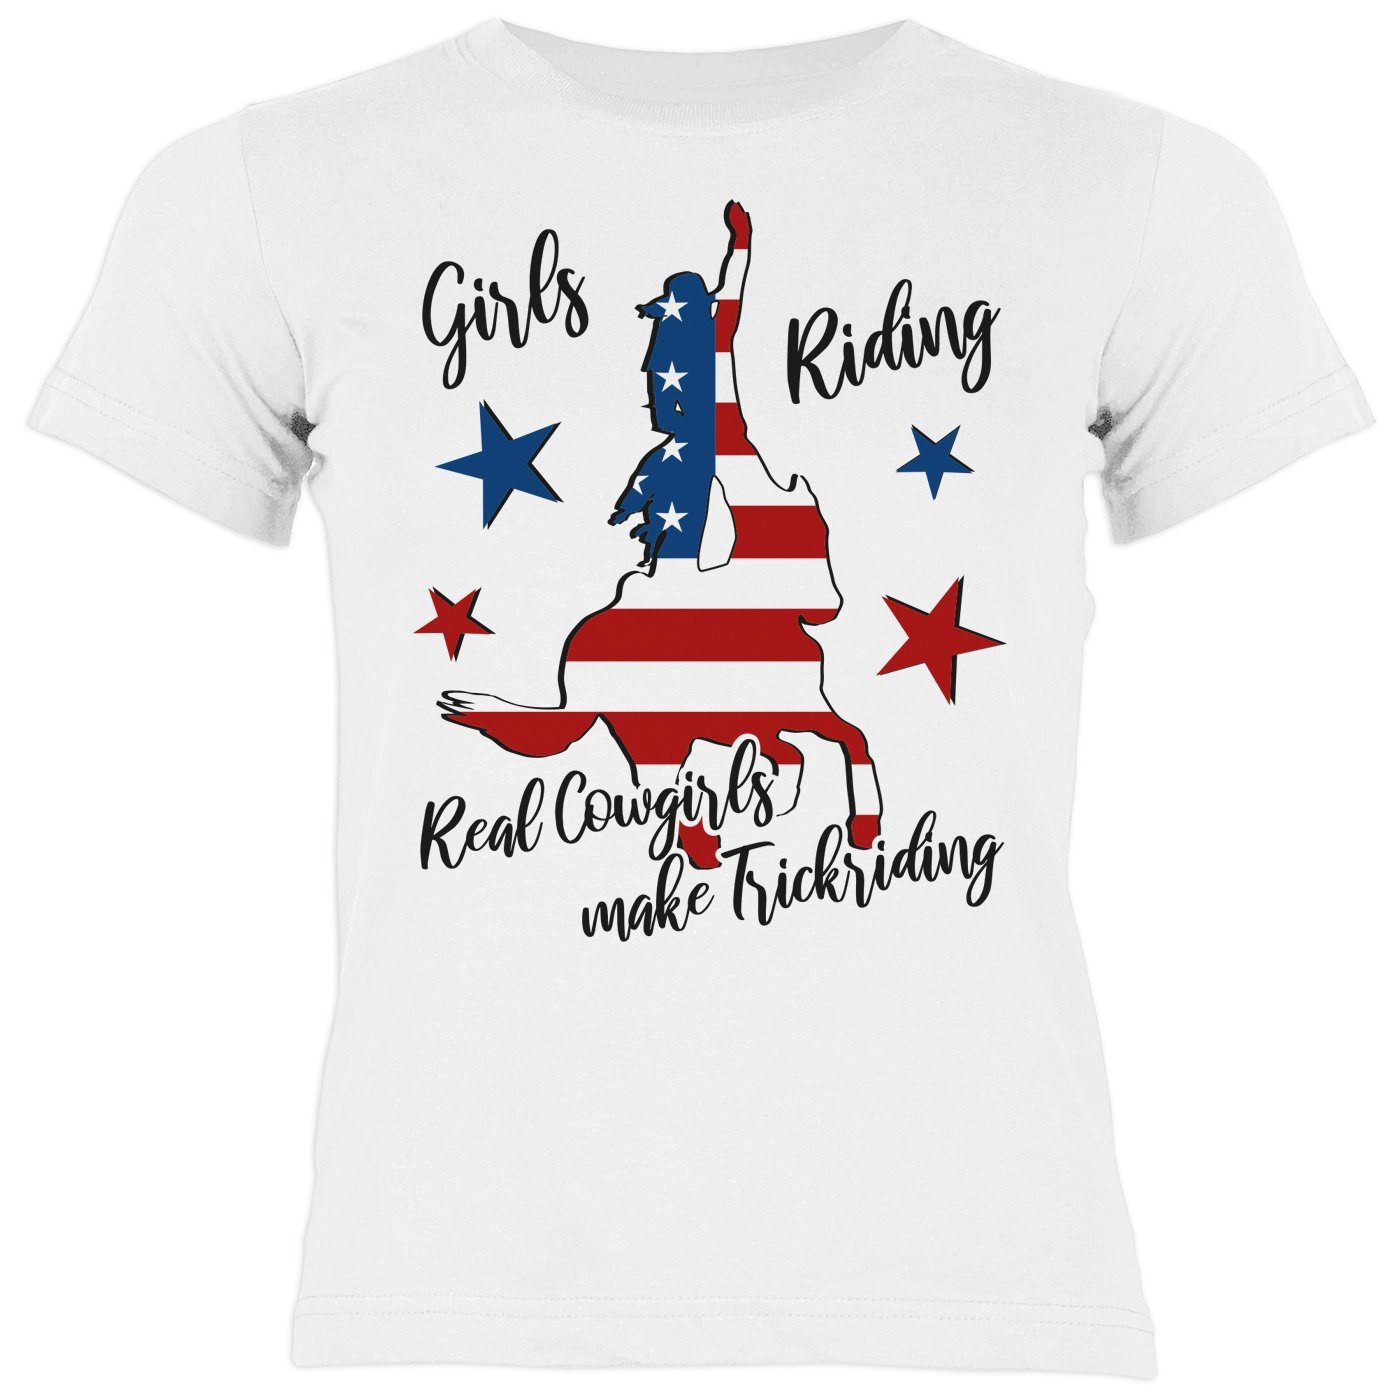 Real Tini Trickreiter Cowgirls T-Shirt Girls make Shirt Kinder Trickreiter - : Motiv Shirts Trickriding Cowgirl T-Shirt Trickriding Kindershirt Riding